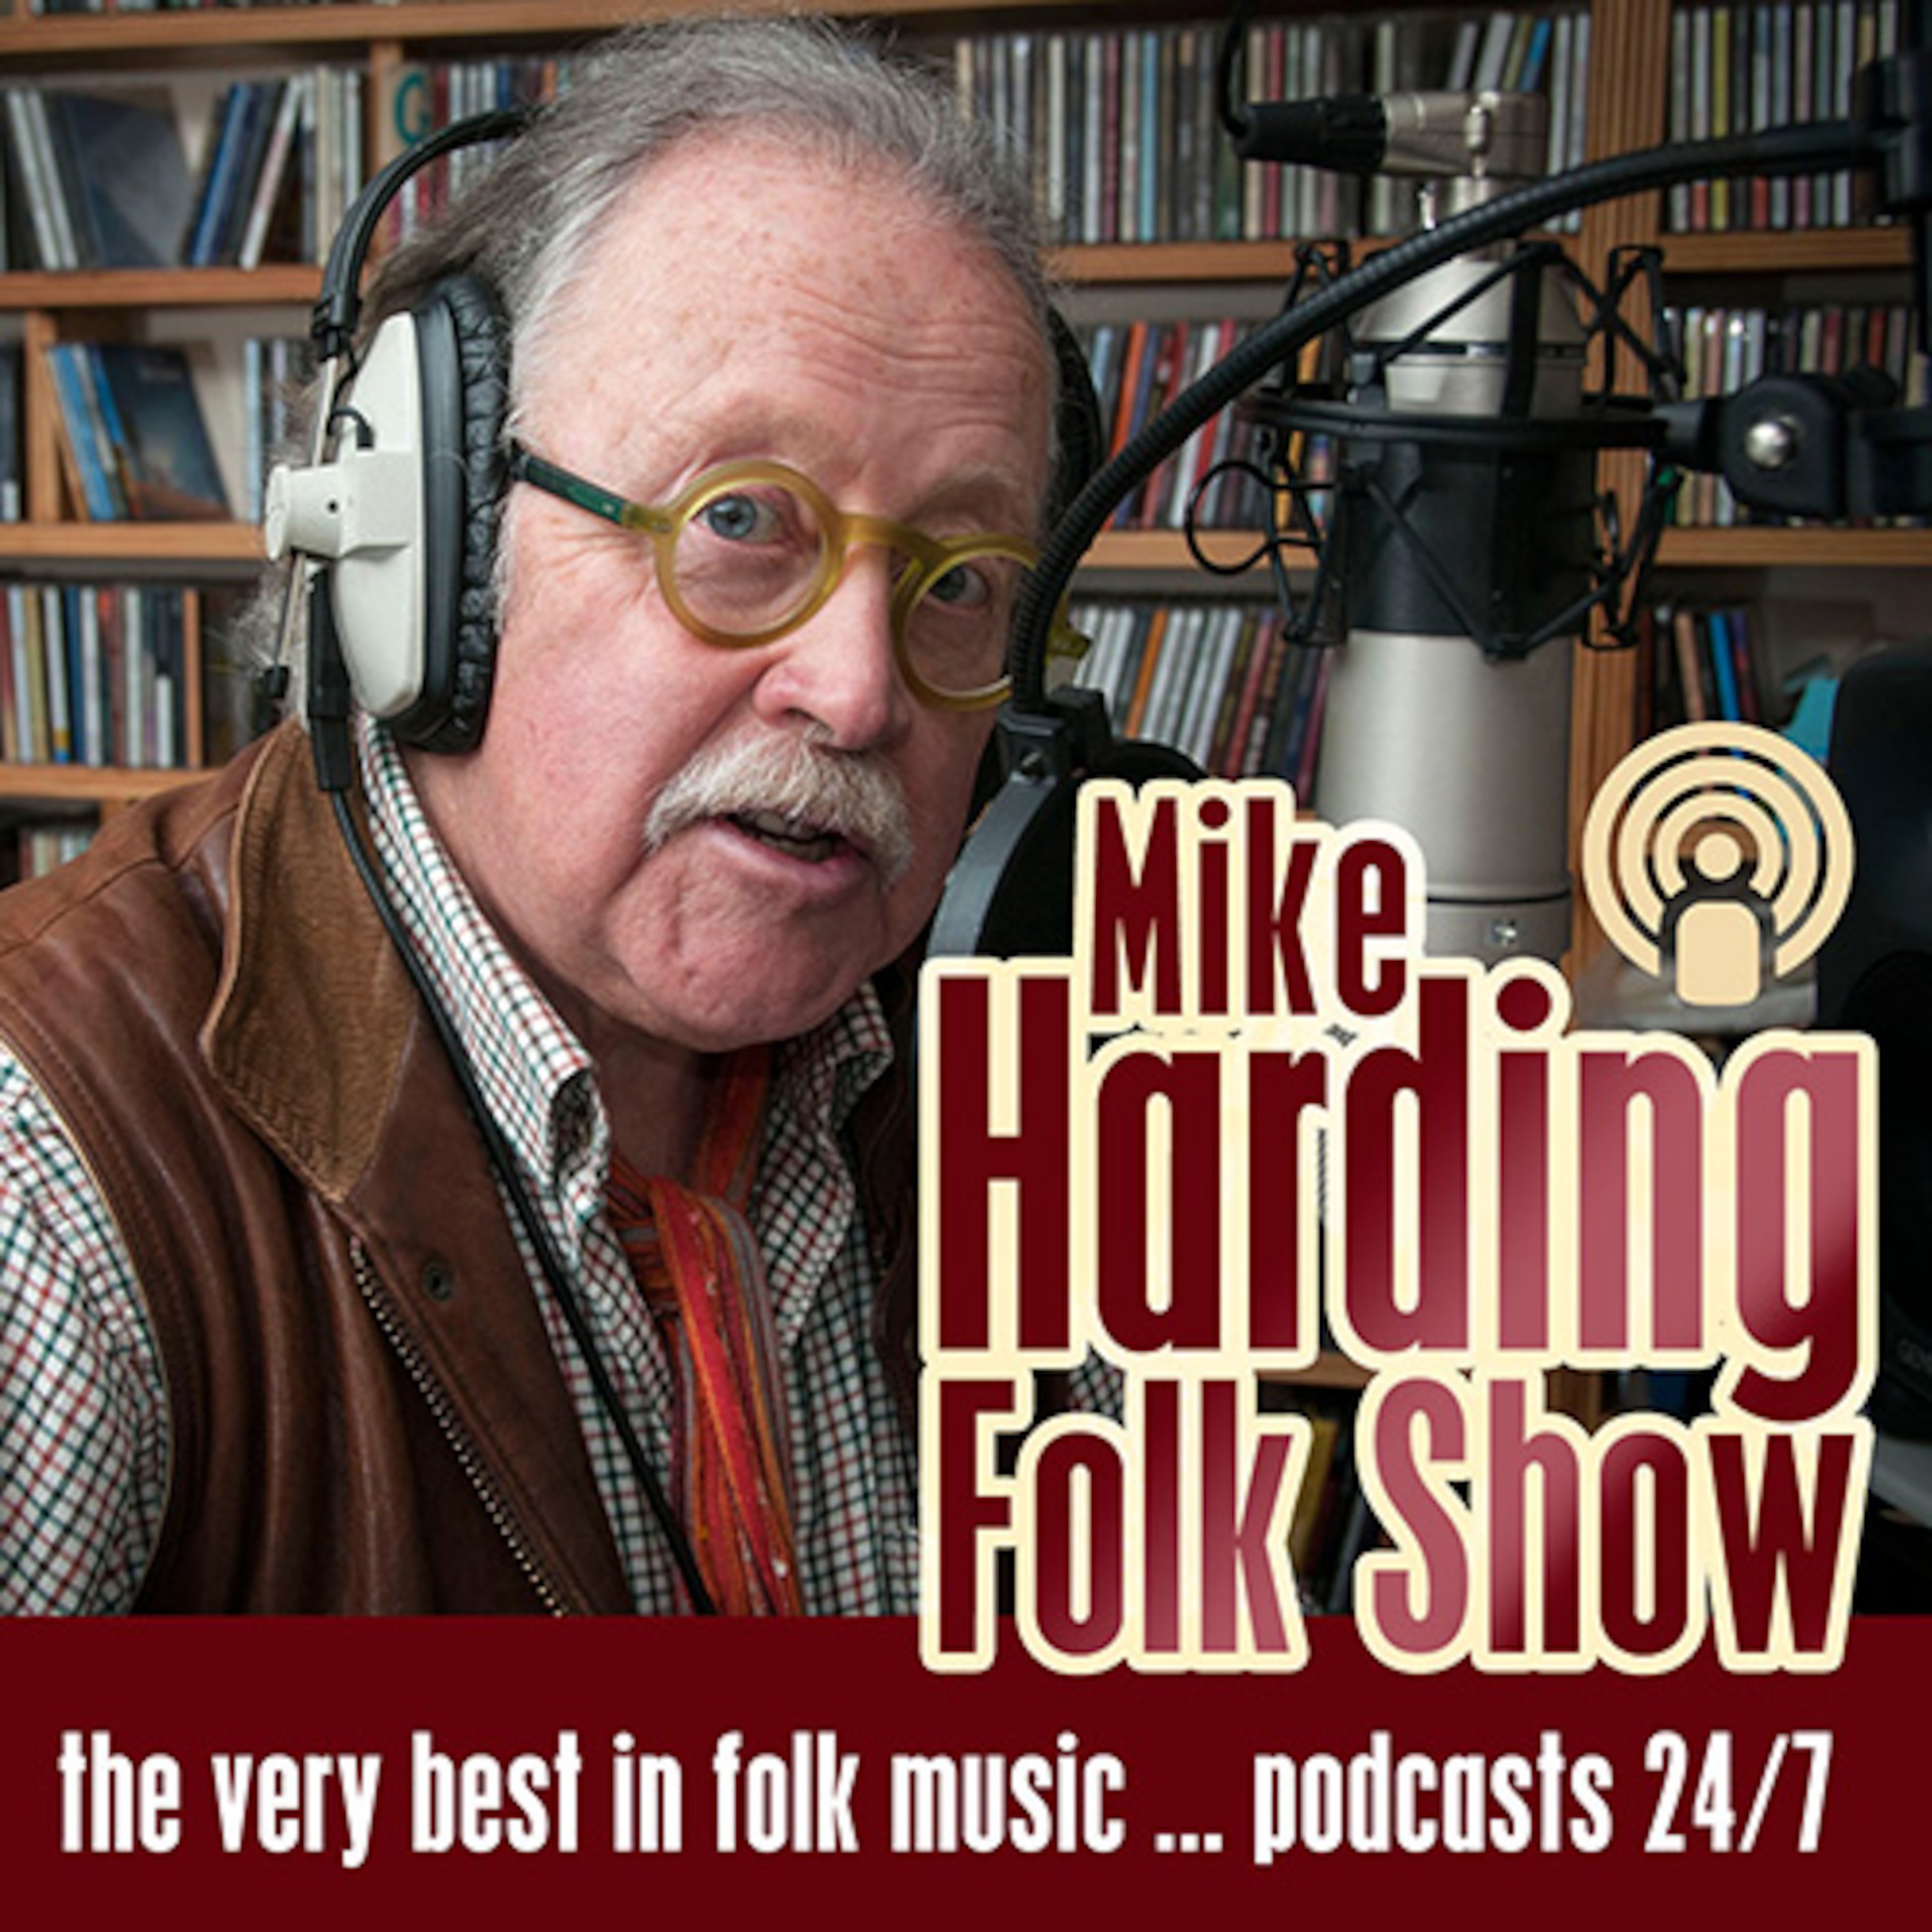 Mike Harding Folk Show 259